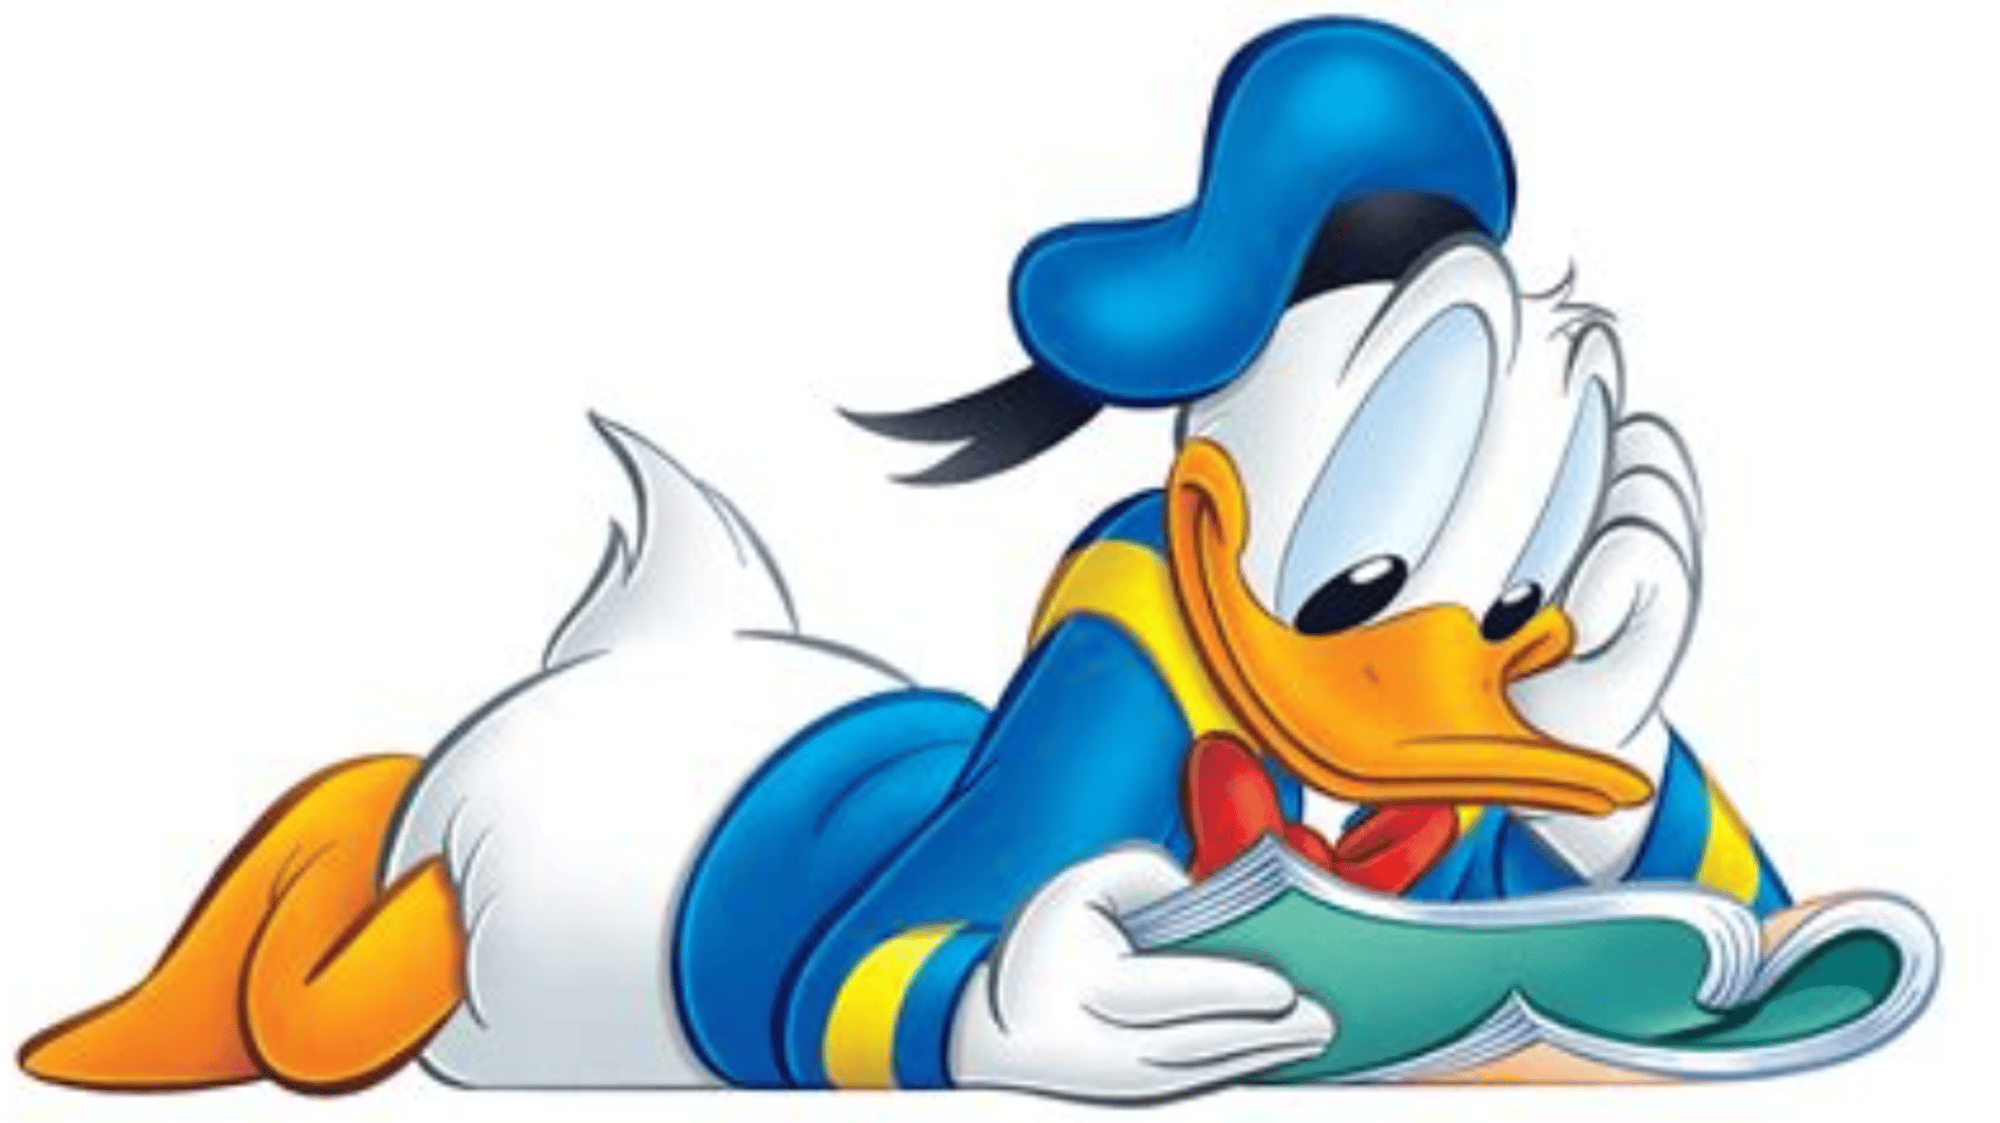 Donald Duck (Disney)